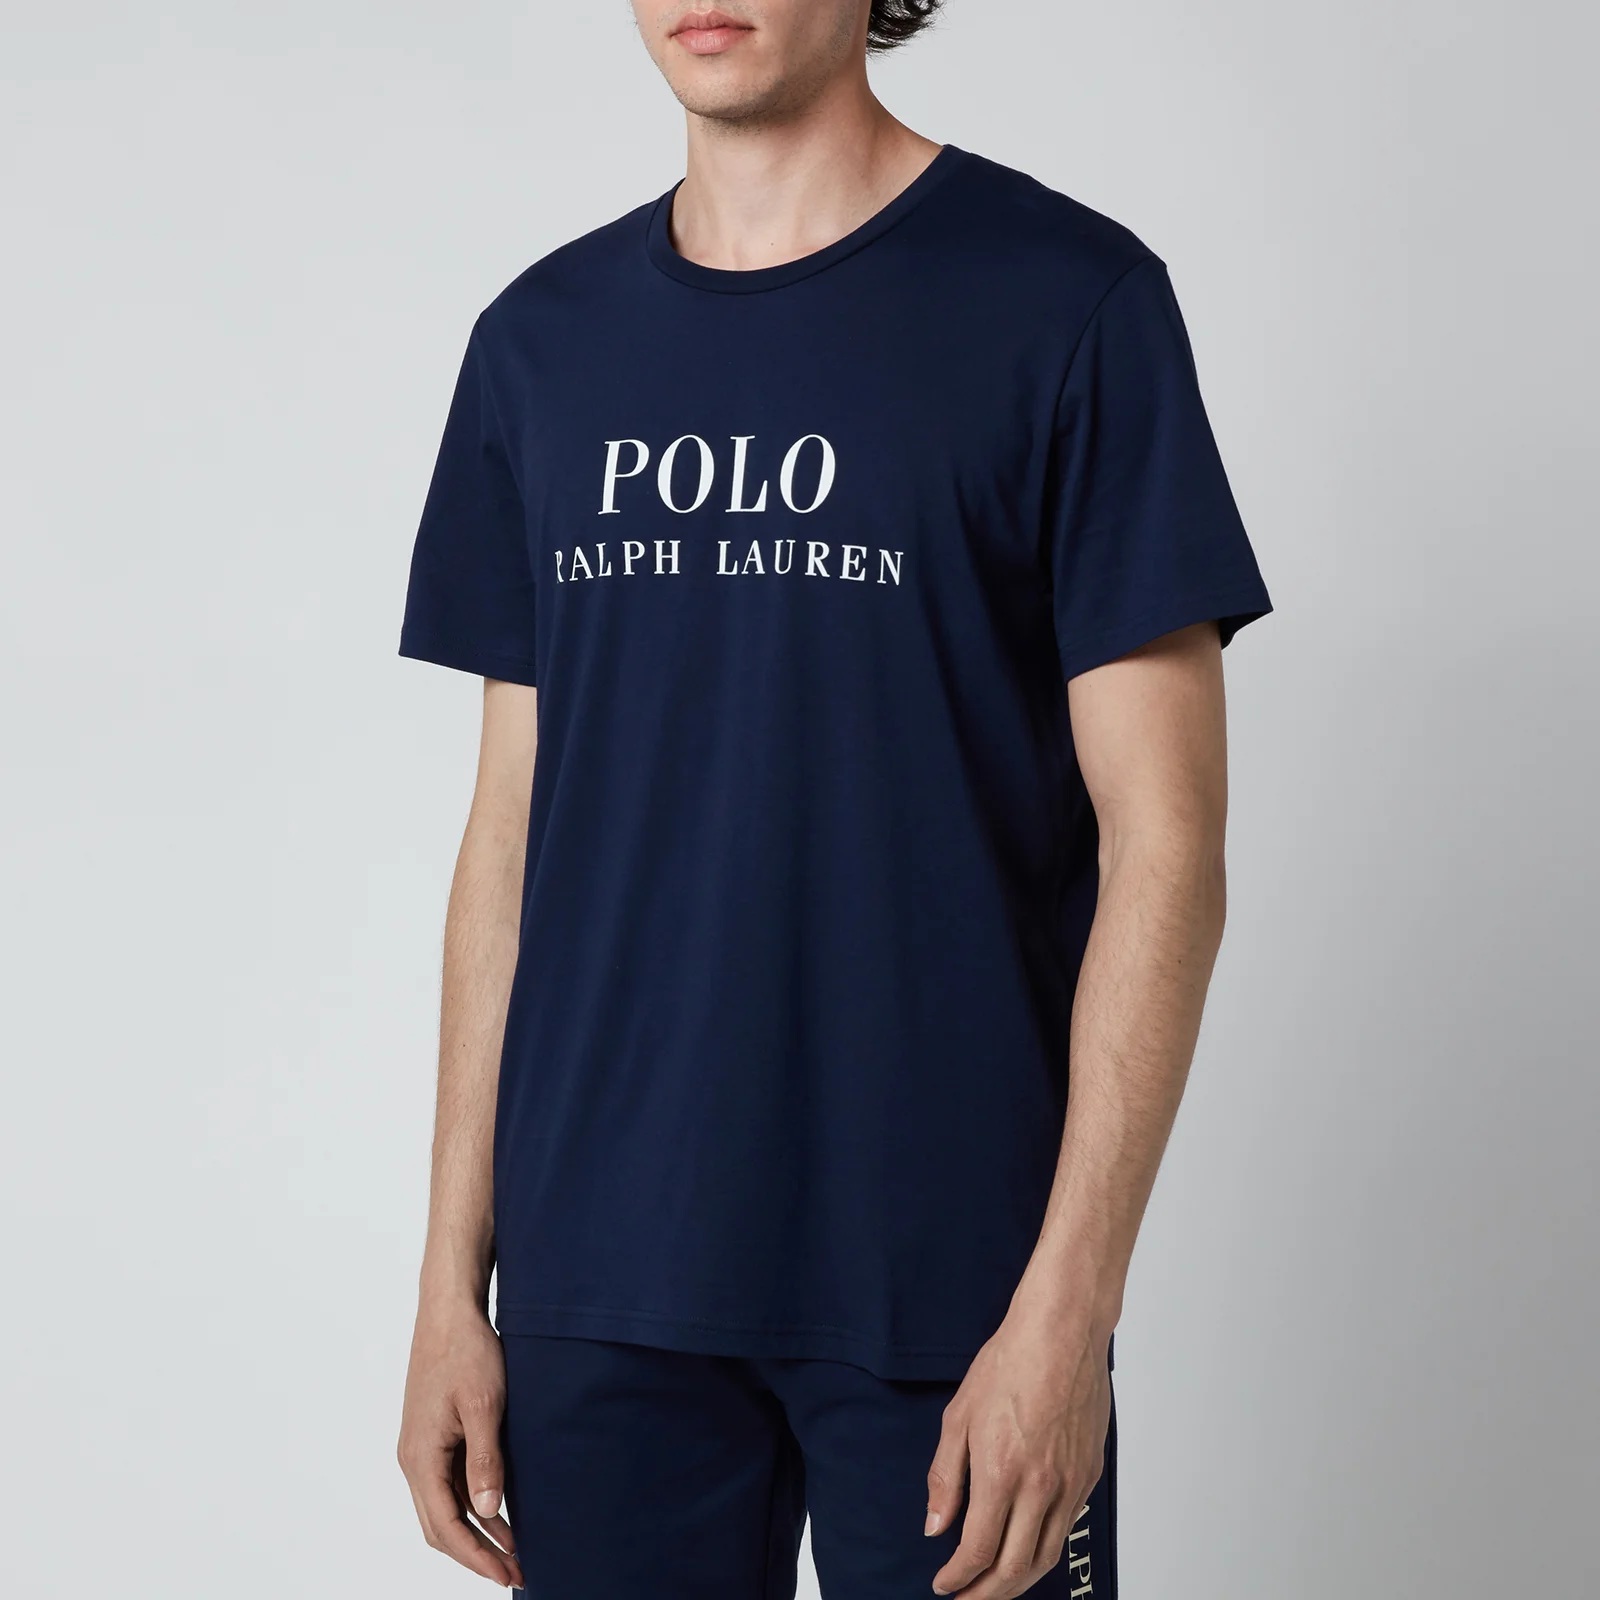 Polo Ralph Lauren Men's Liquid Cotton Branded Crewneck T-Shirt - Cruise Navy Image 1